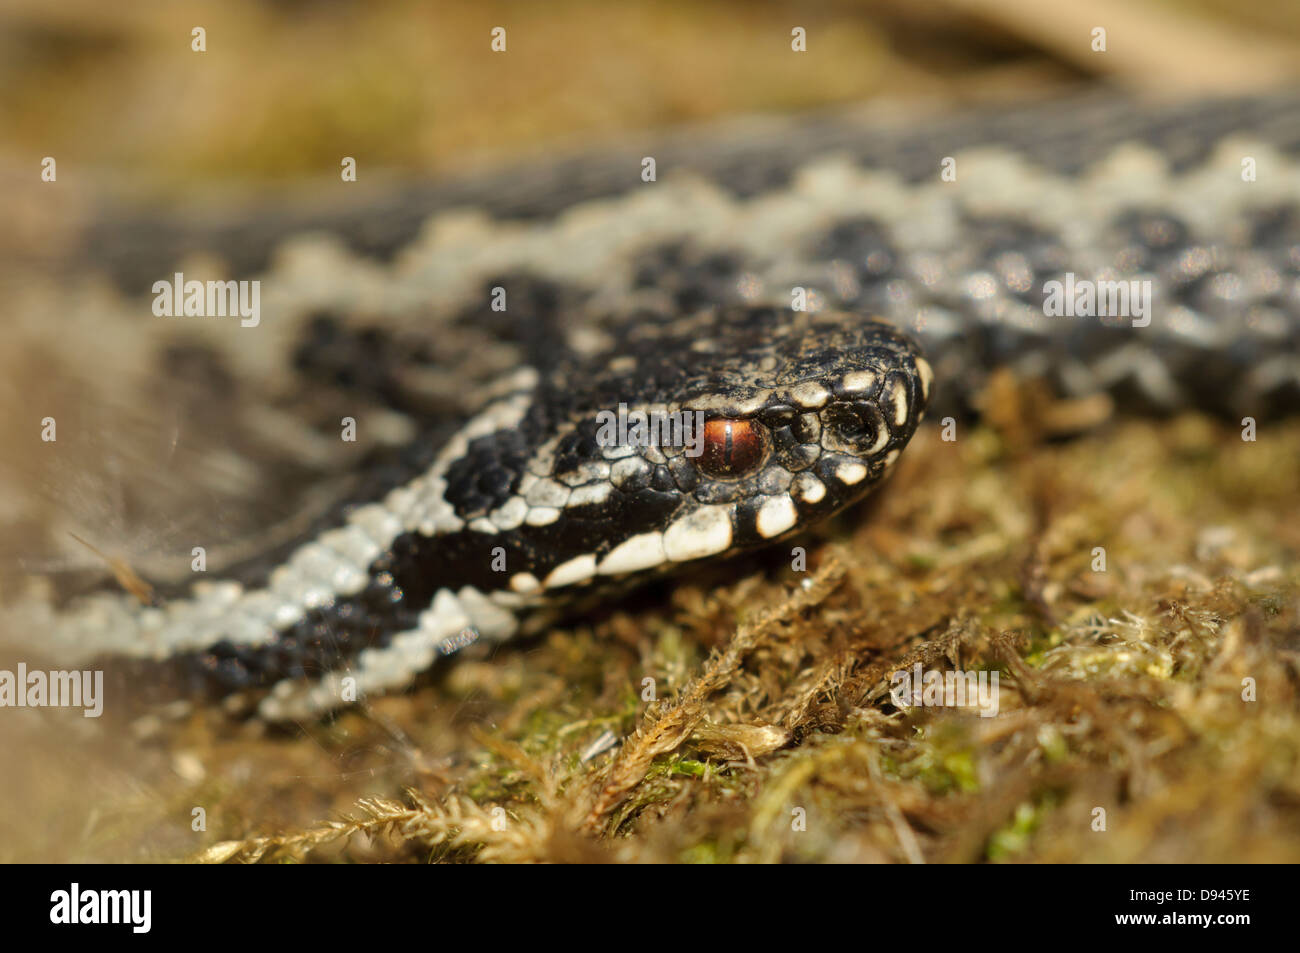 Viper snake, close-up Stock Photo